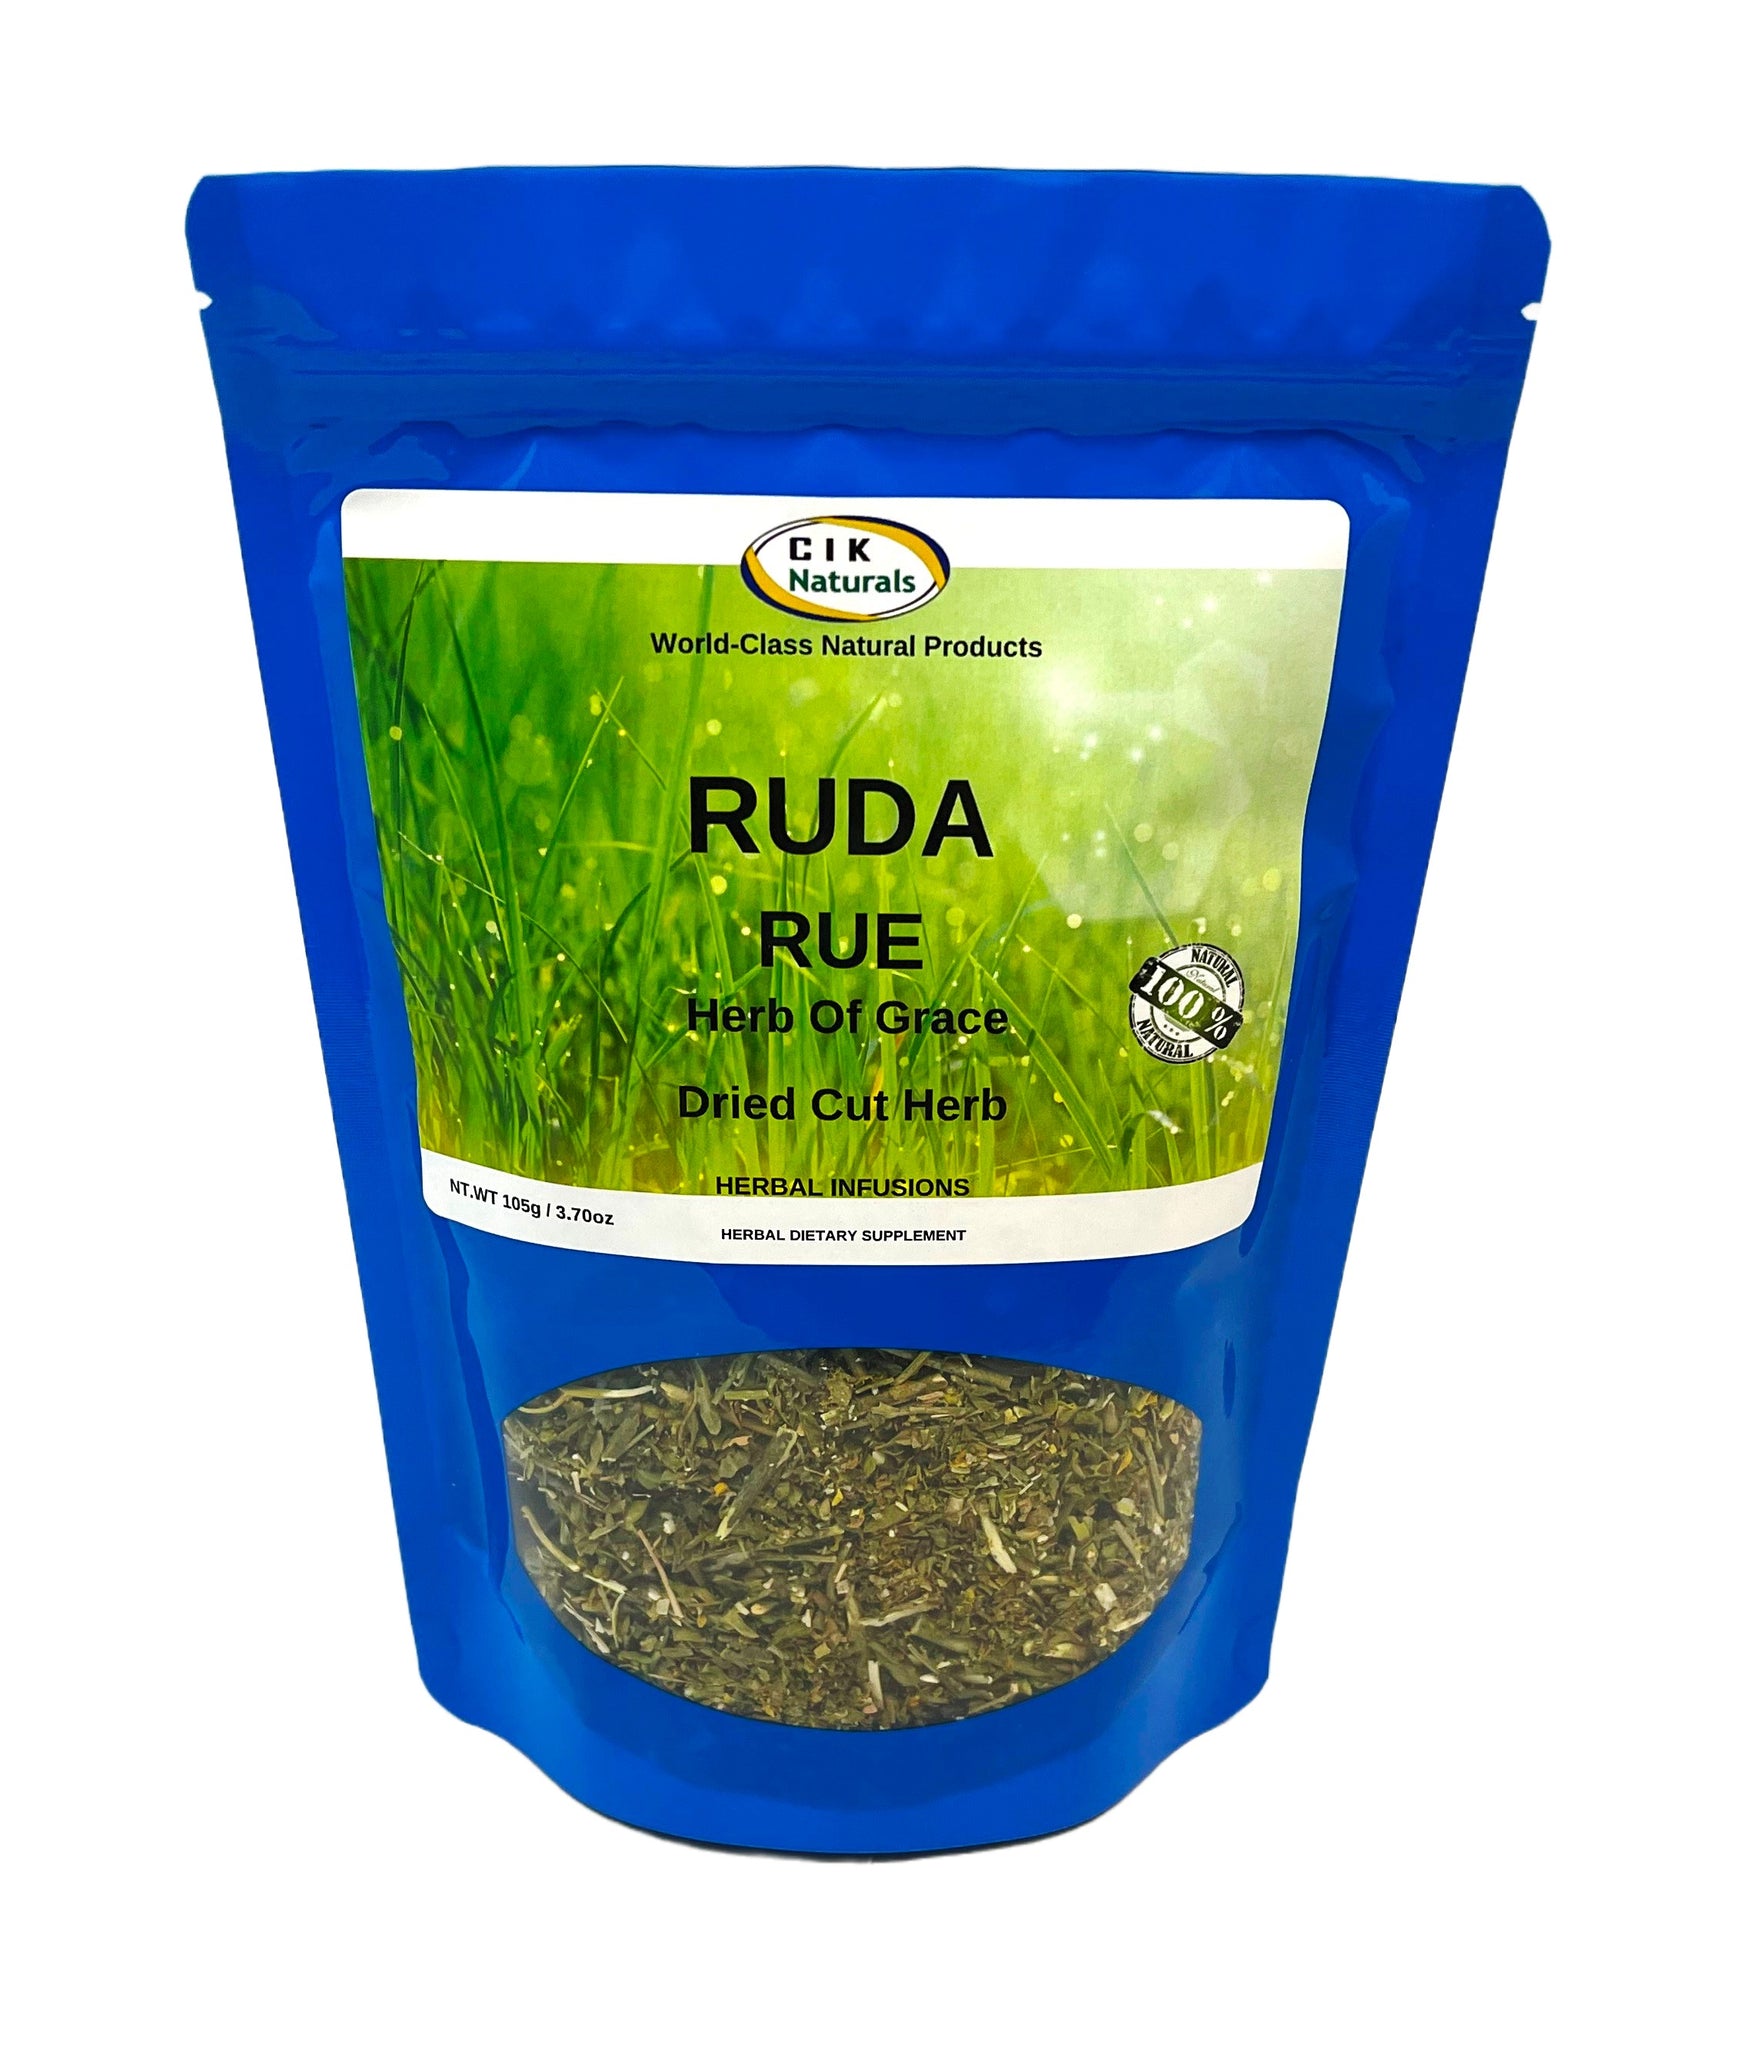 RUDA POWDER FOR SALE - Ruta Graveolens Herbal Benefits and Healing Wonders  Unveiled